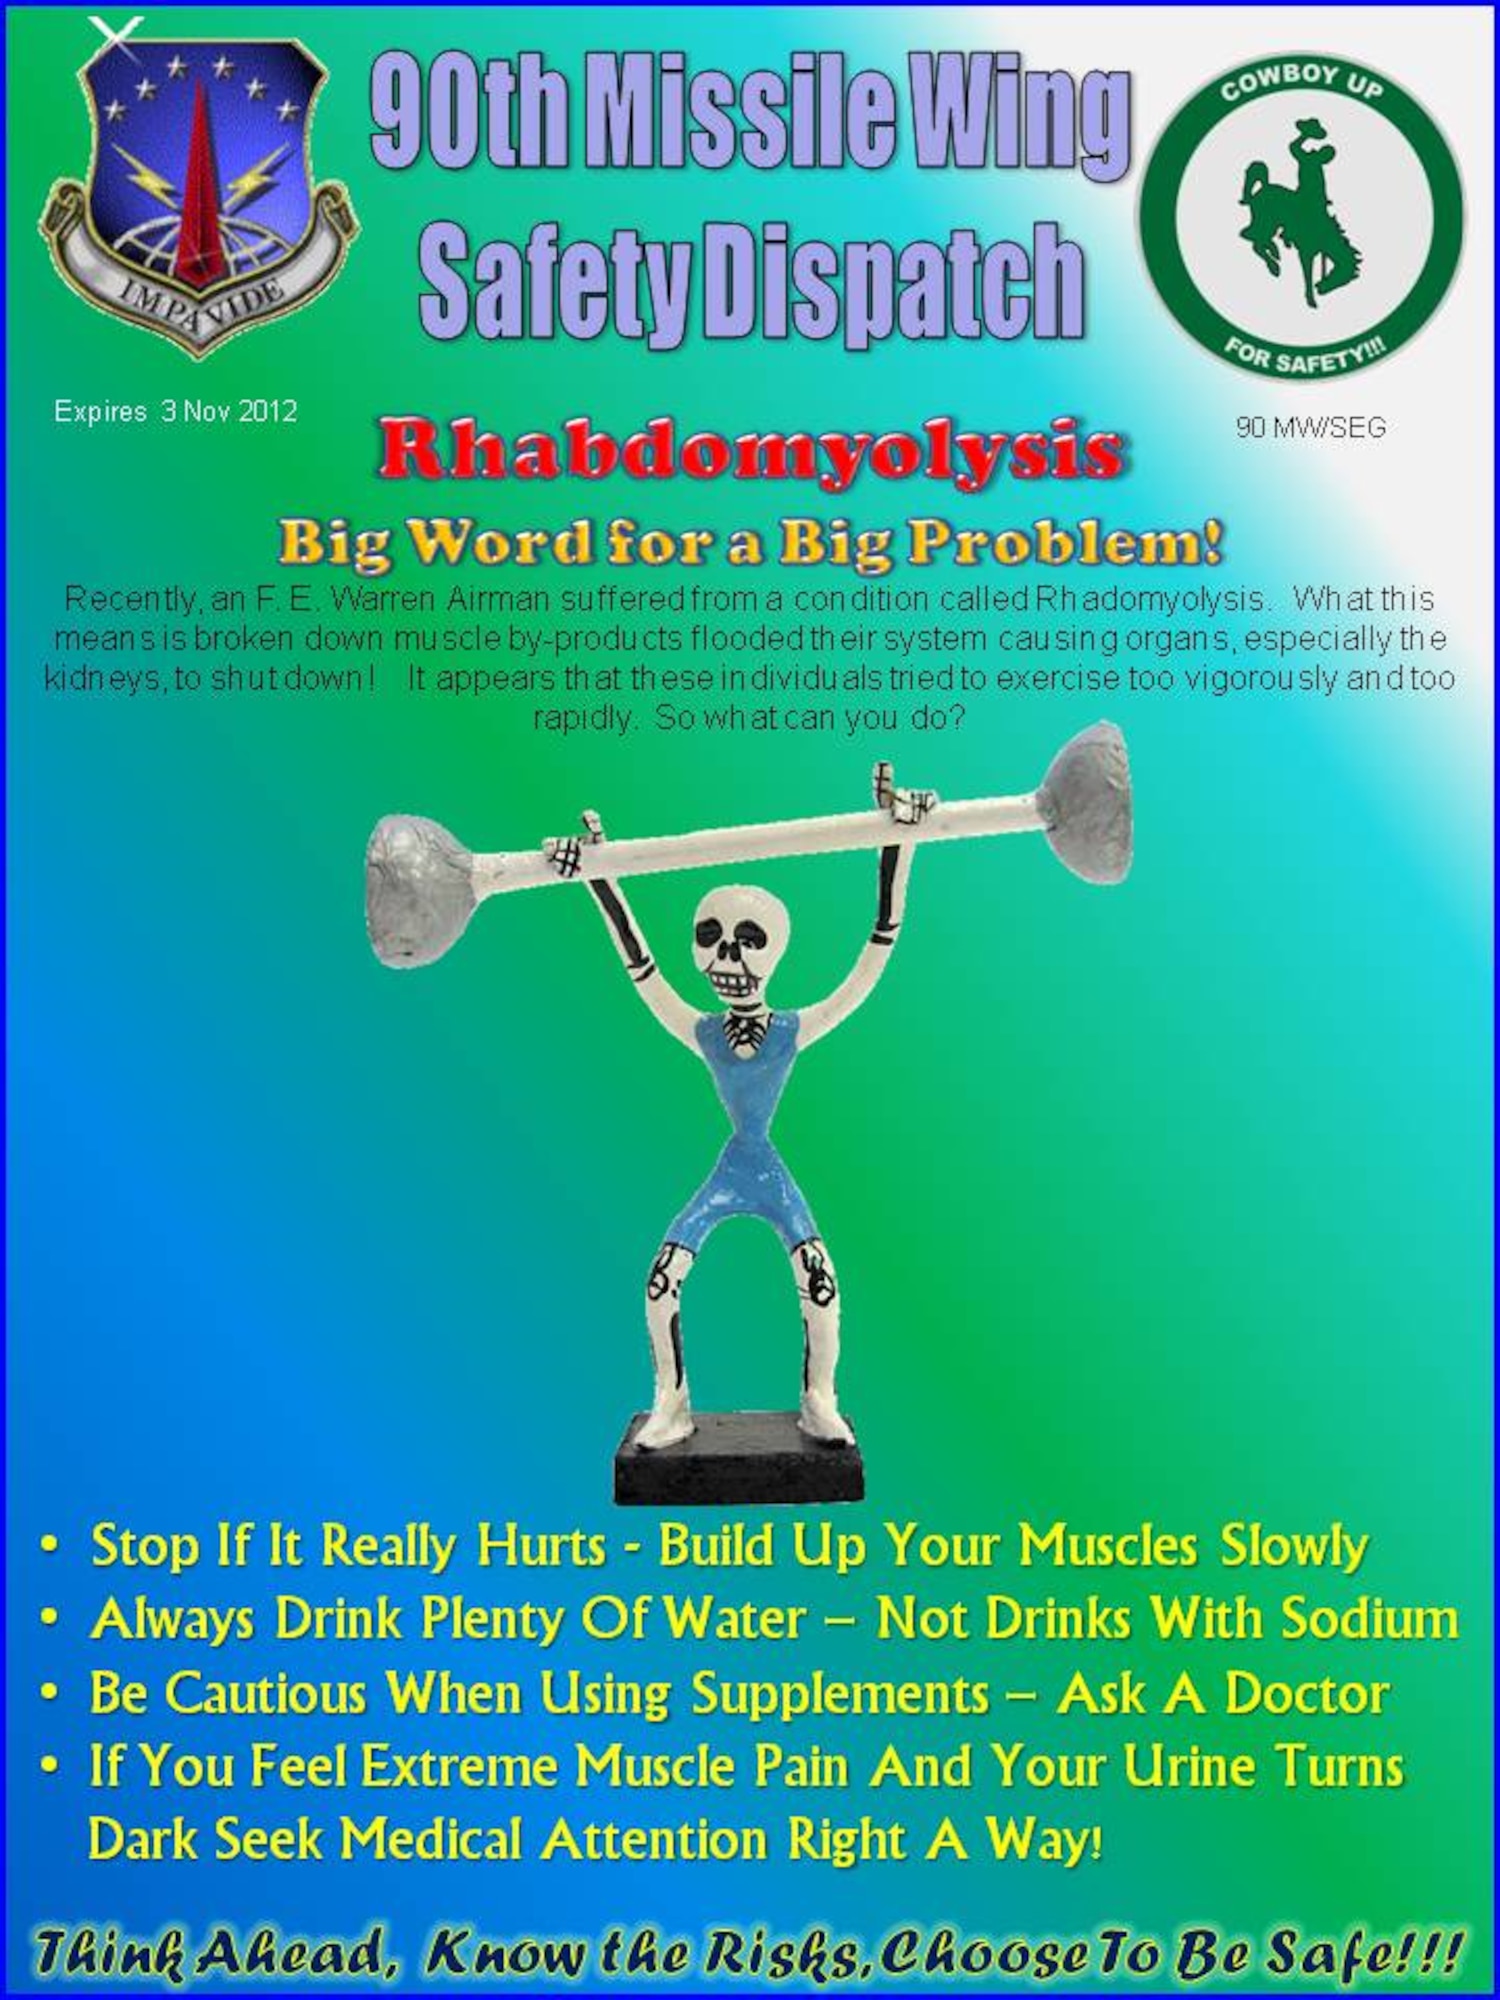 Poster describinbg ways to protect onesself from rhabdomyolysis.